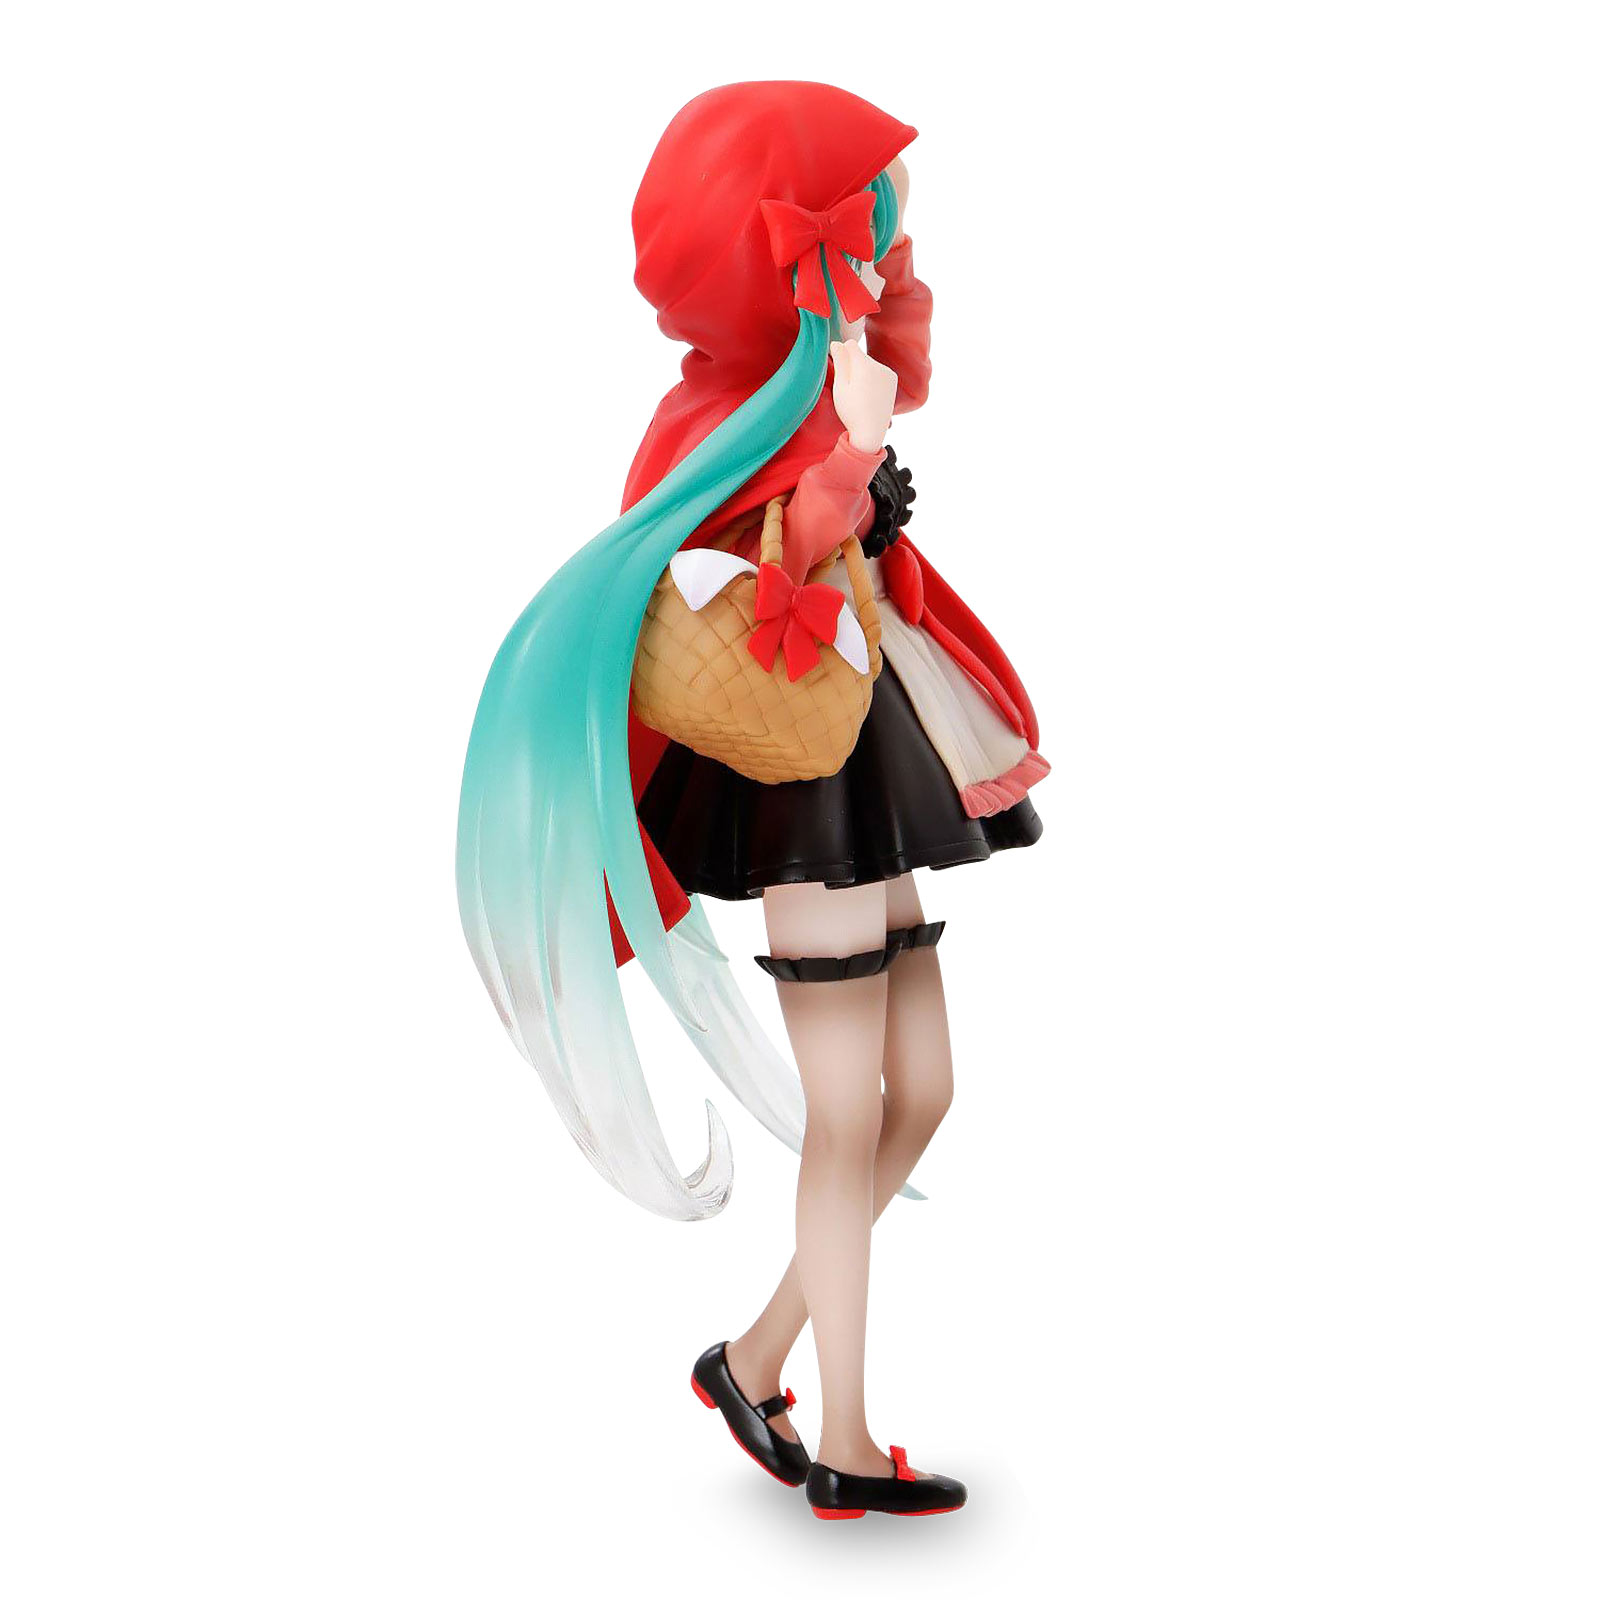 Hatsune Miku - Little Red Riding Hood Figure